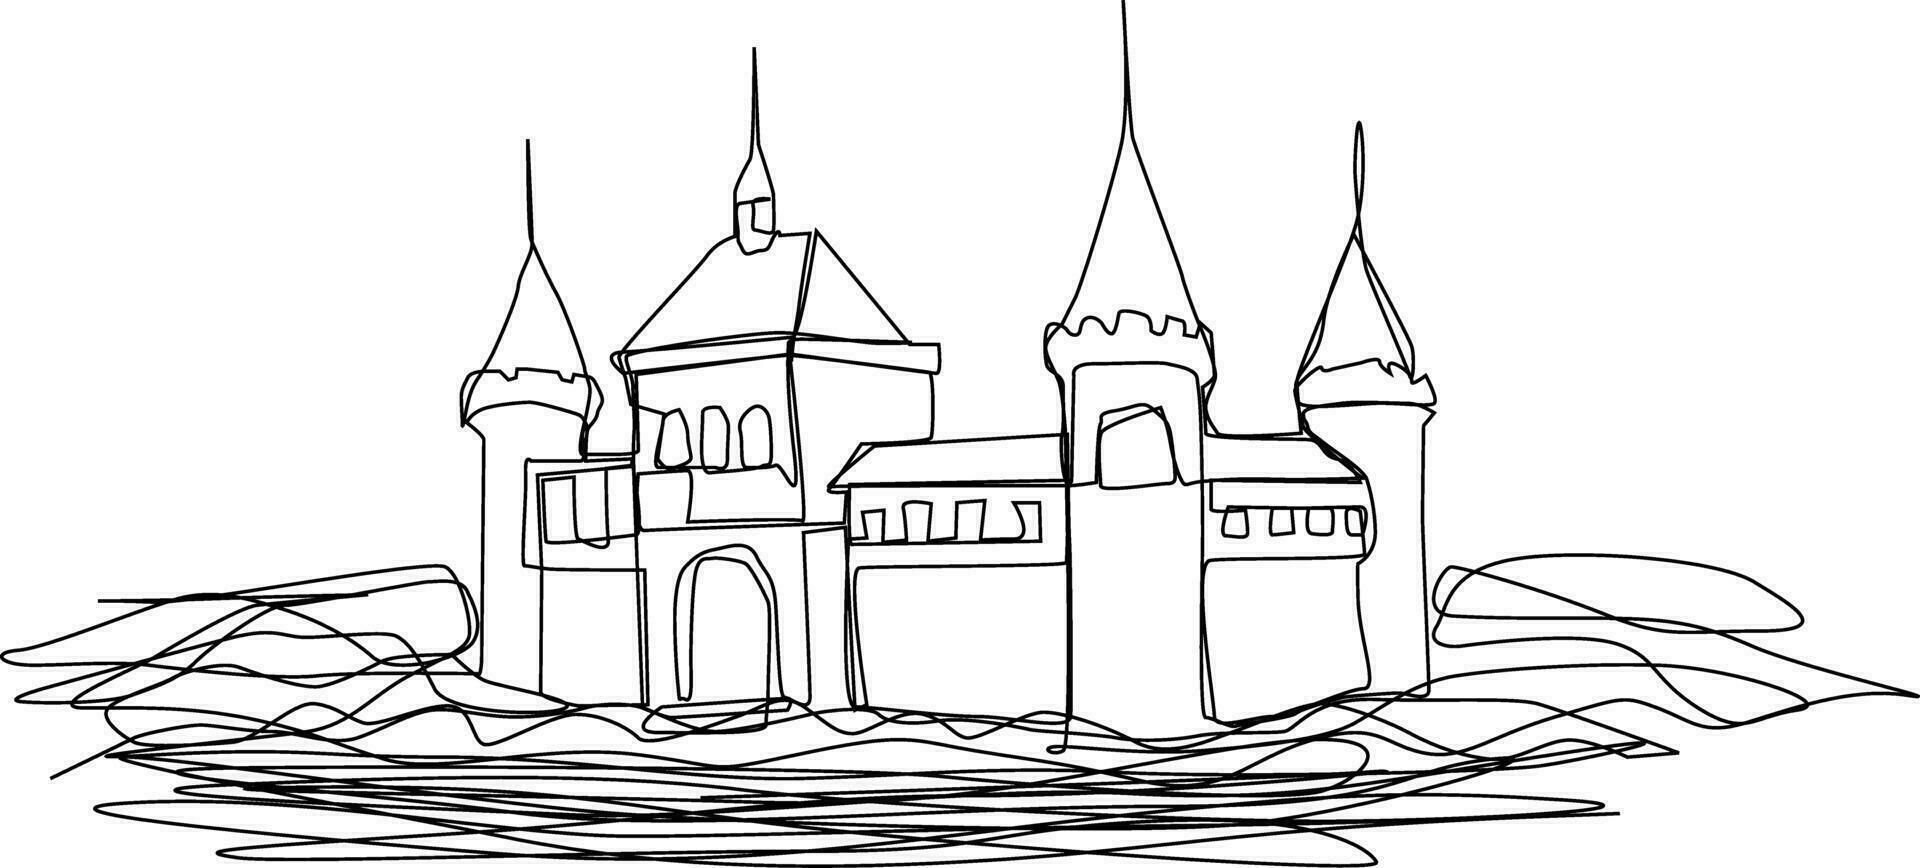 One line art. continuous line art. illustration of an ancient castle vector